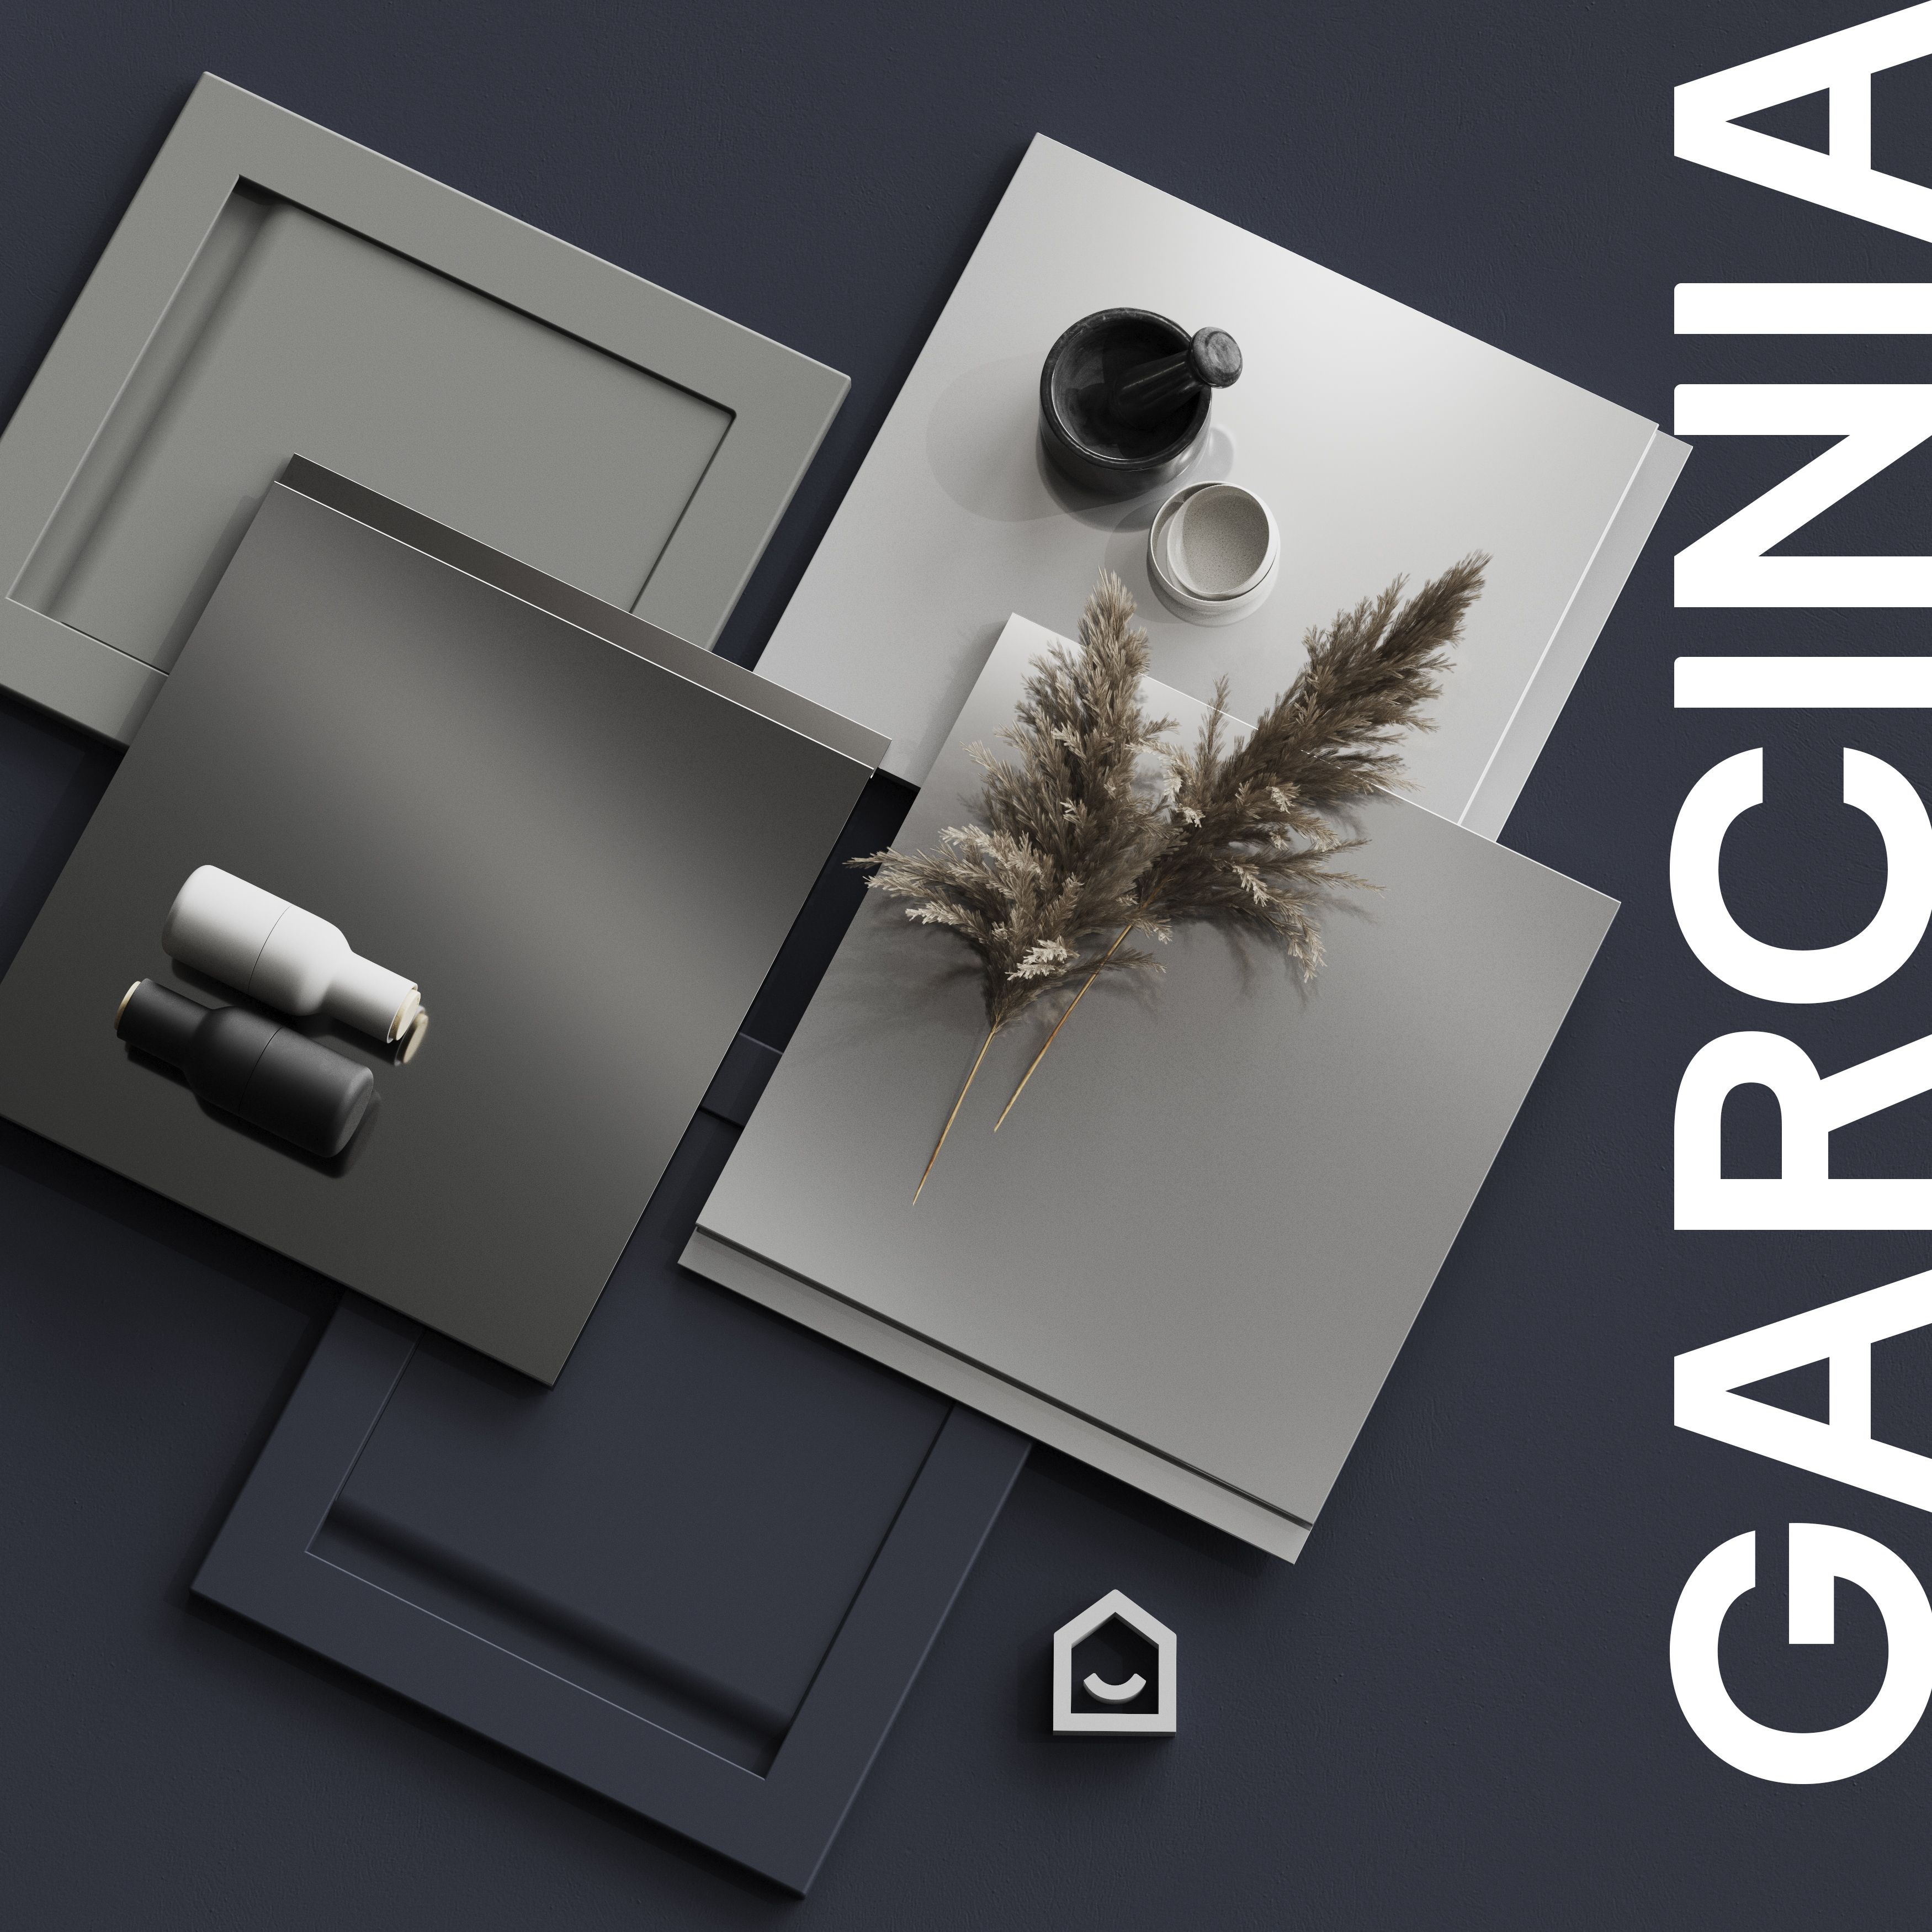 GoodHome Garcinia Gloss light grey integrated handle Appliance Cabinet door (W)600mm (H)687mm (T)19mm